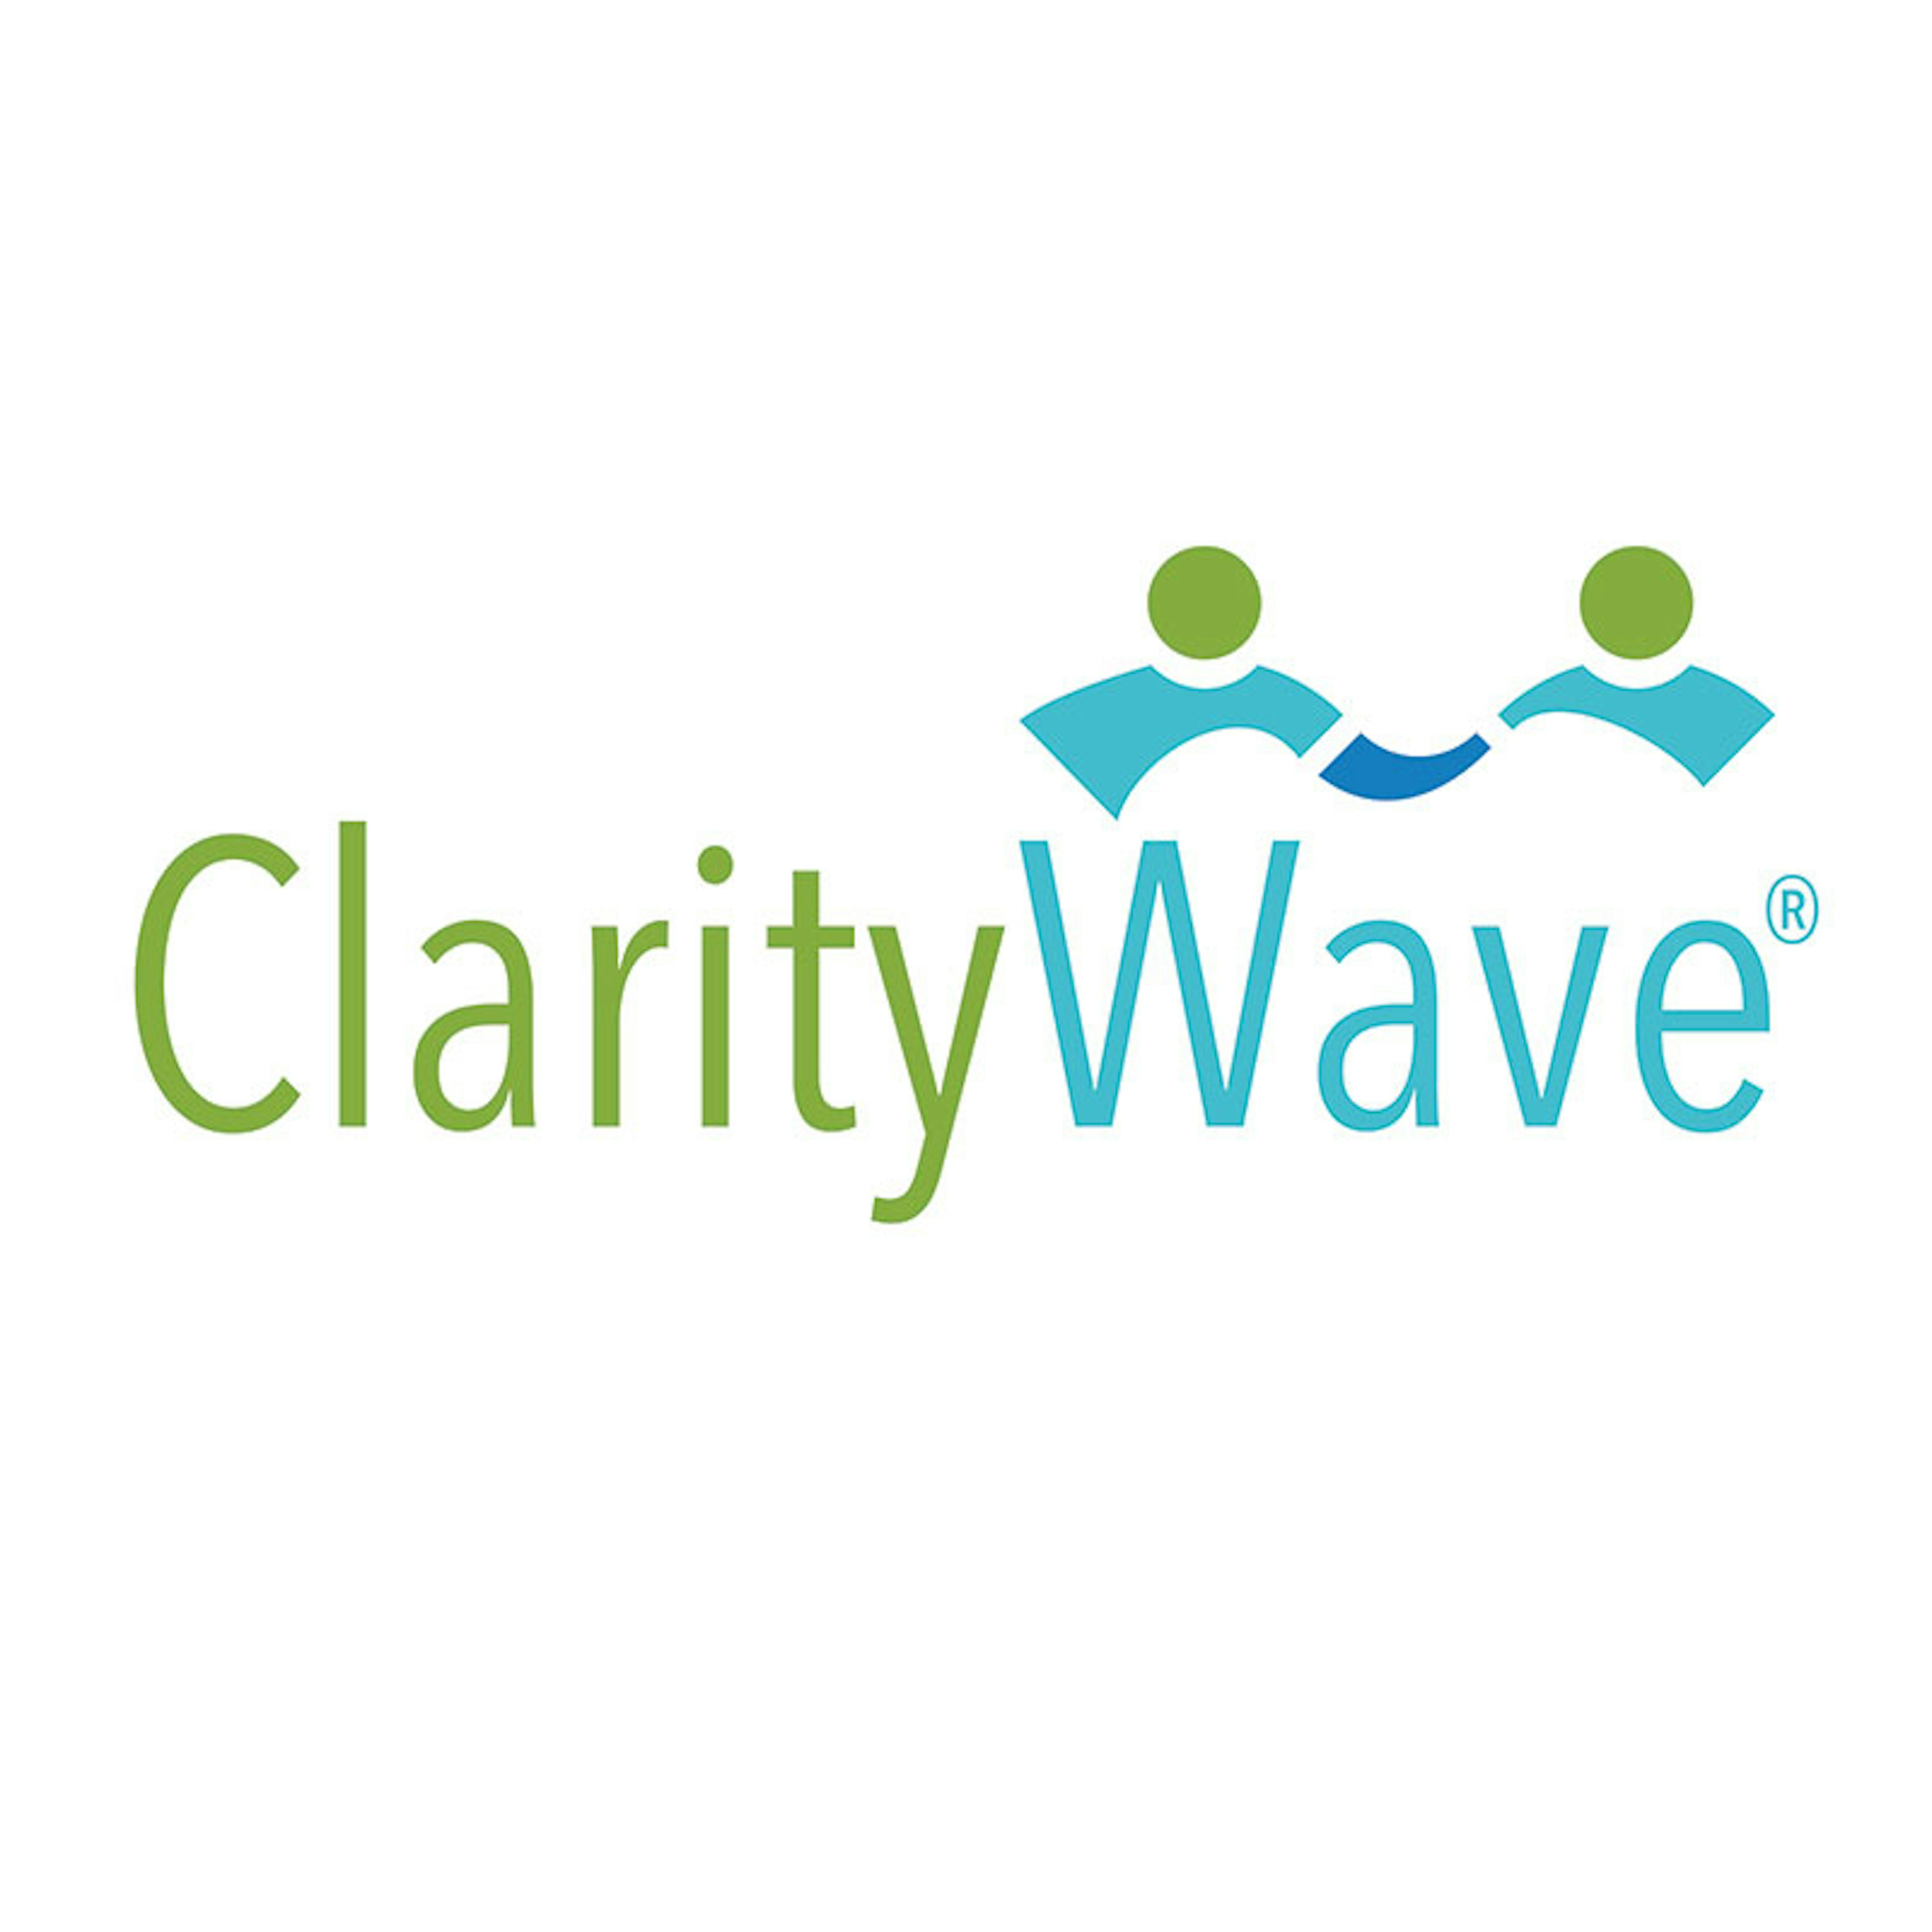 Clarity Wave Logo